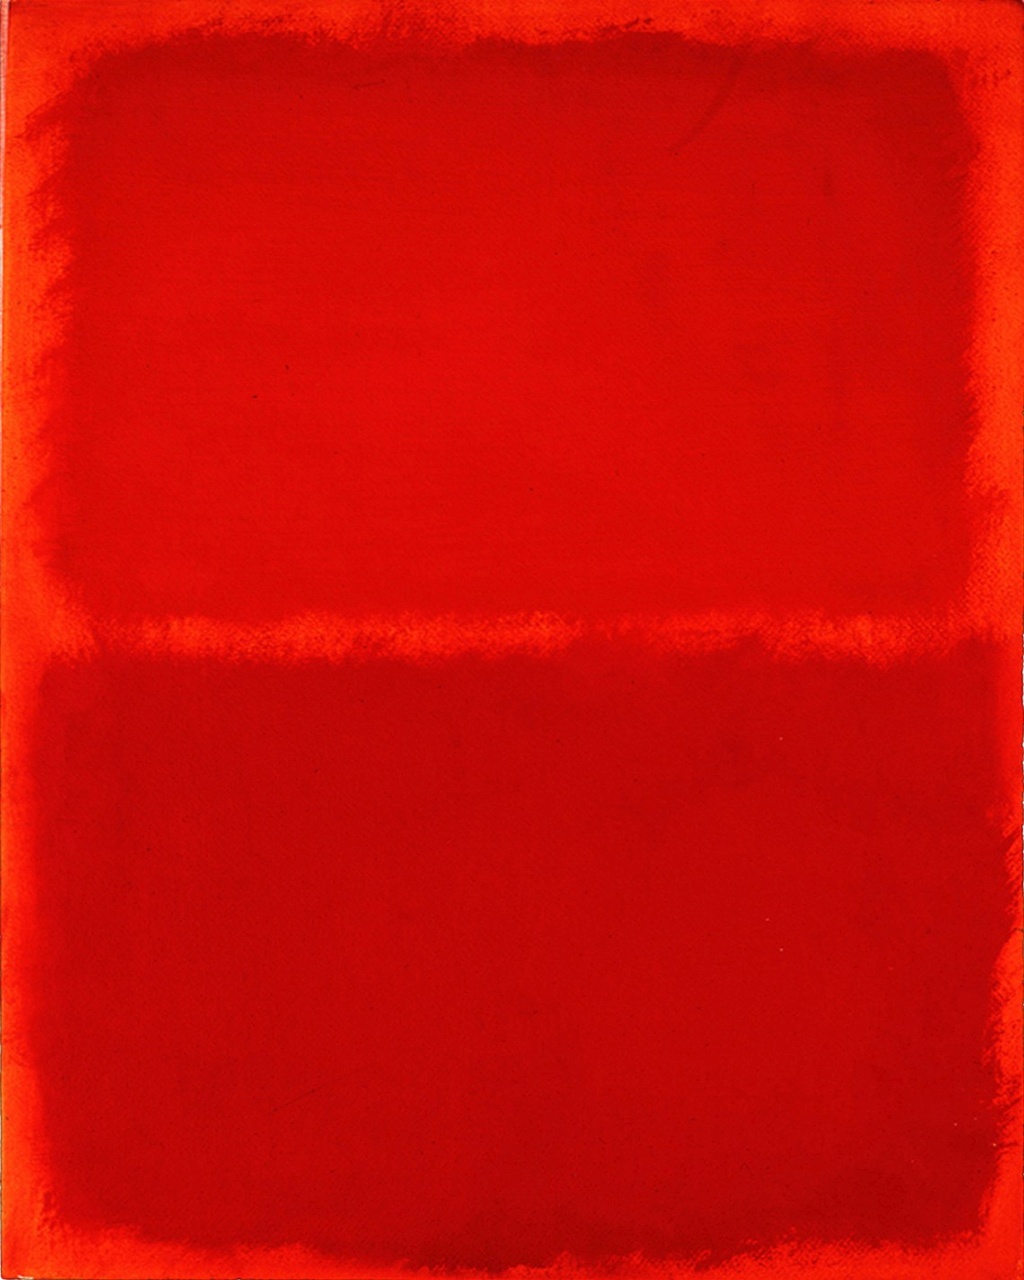 Mark Rothko, Untitled (Red Orange), 1950